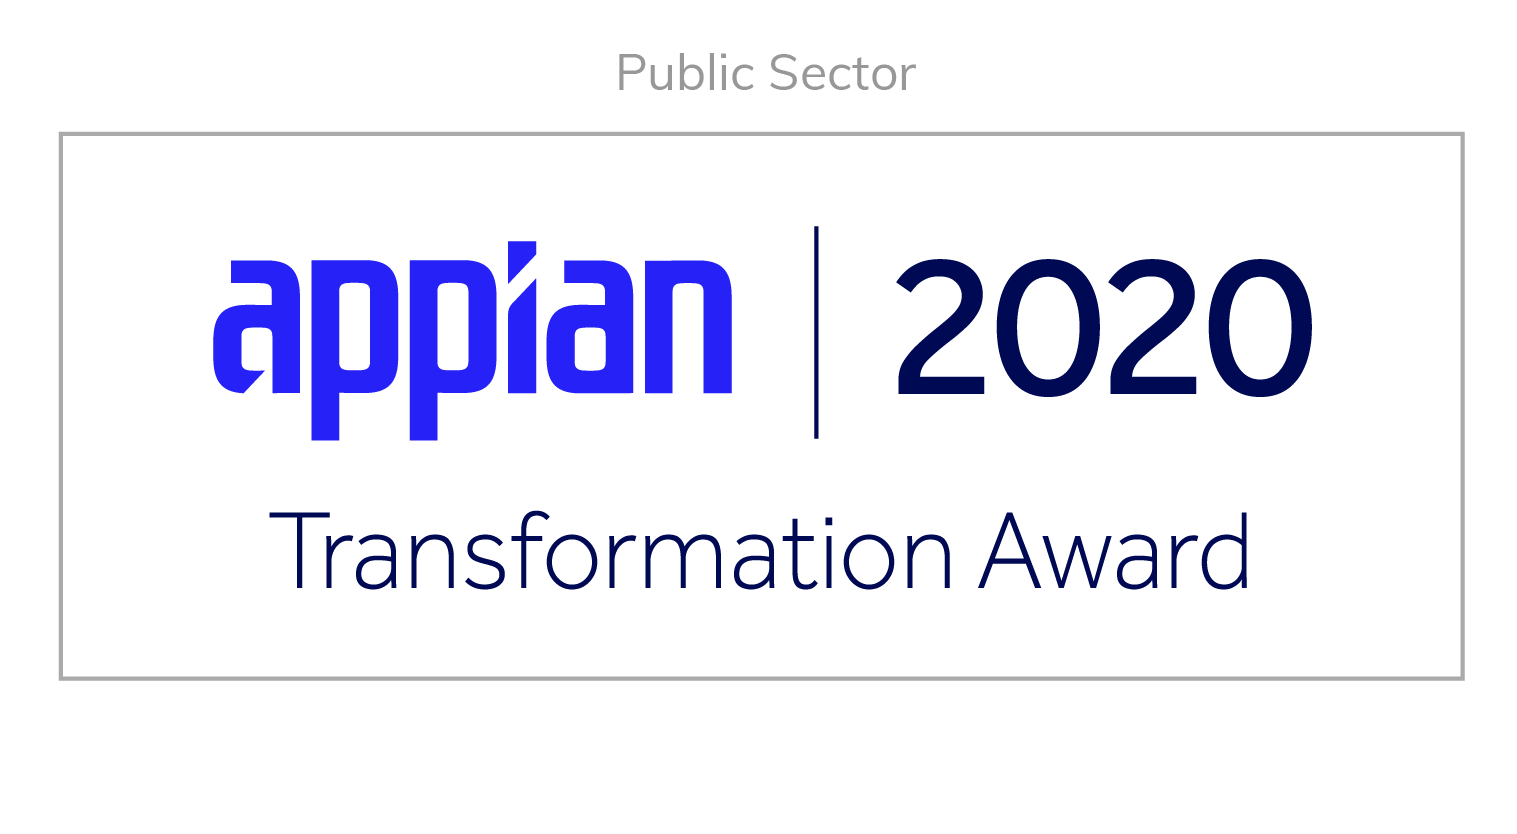 Transformation Award 2020 - Public Sector